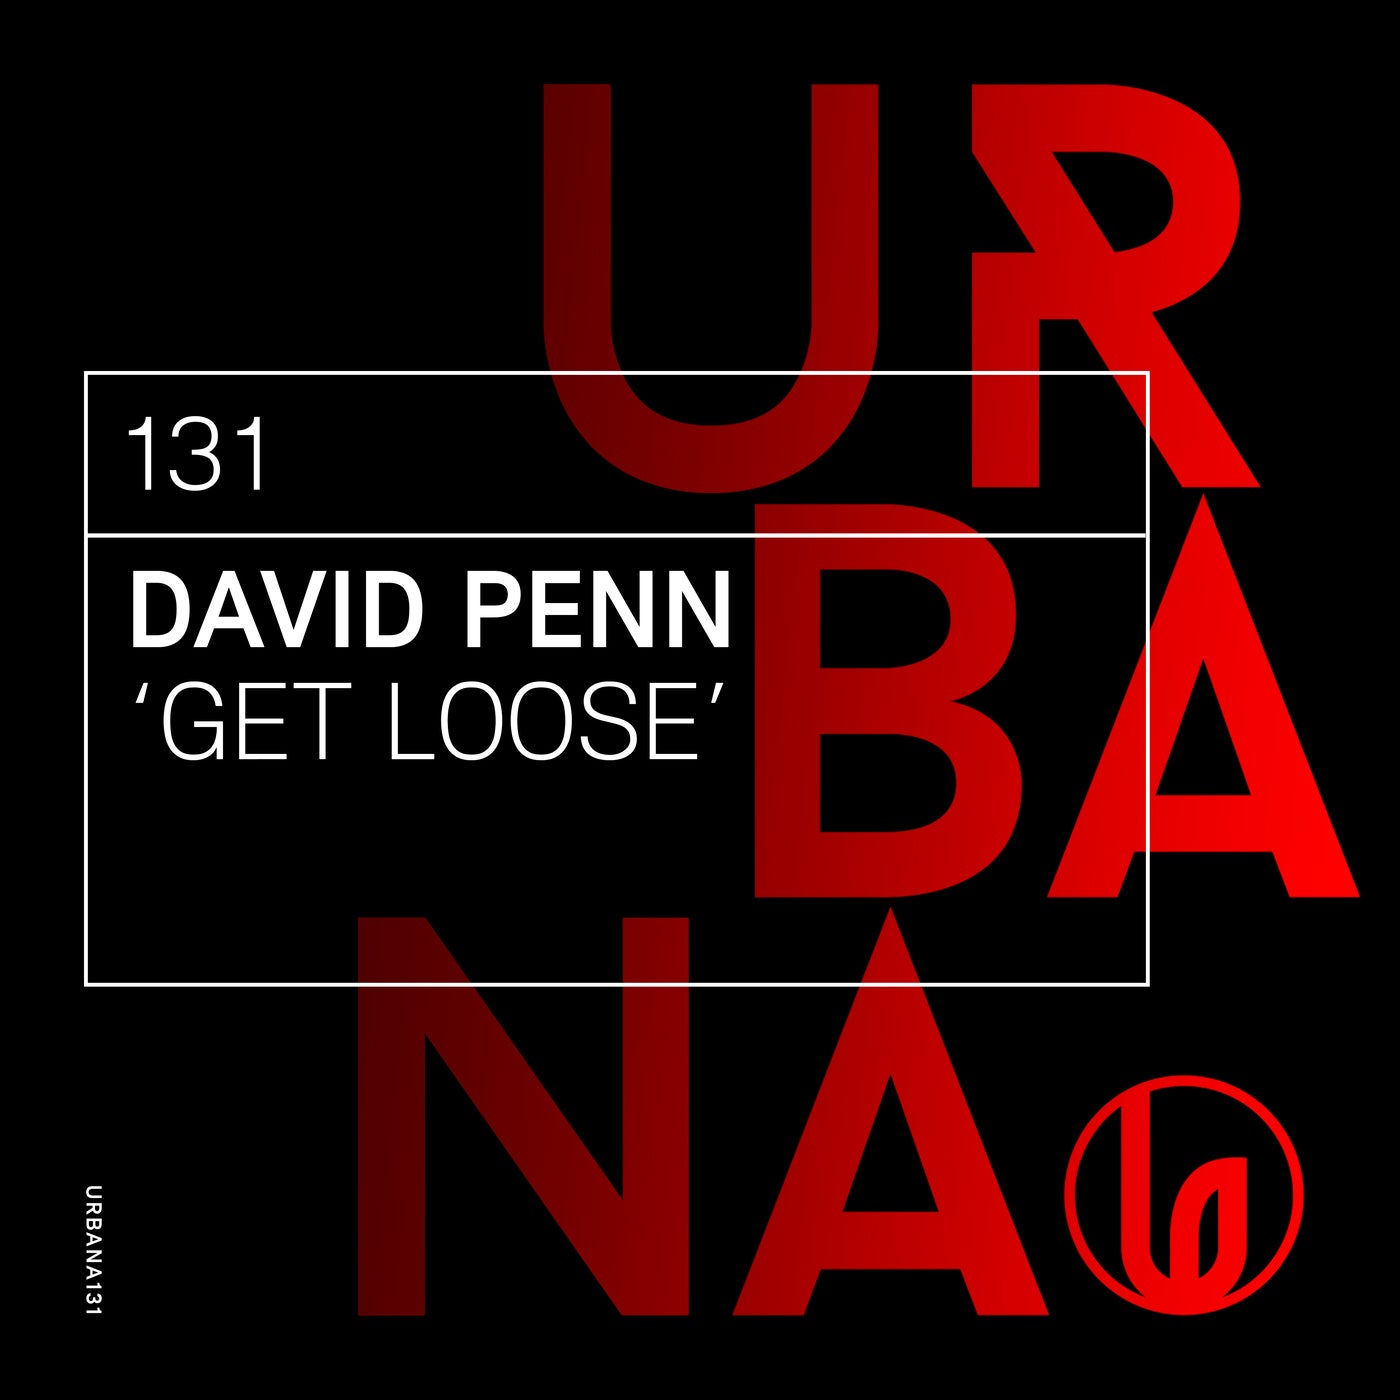 David Penn "Get Loose"